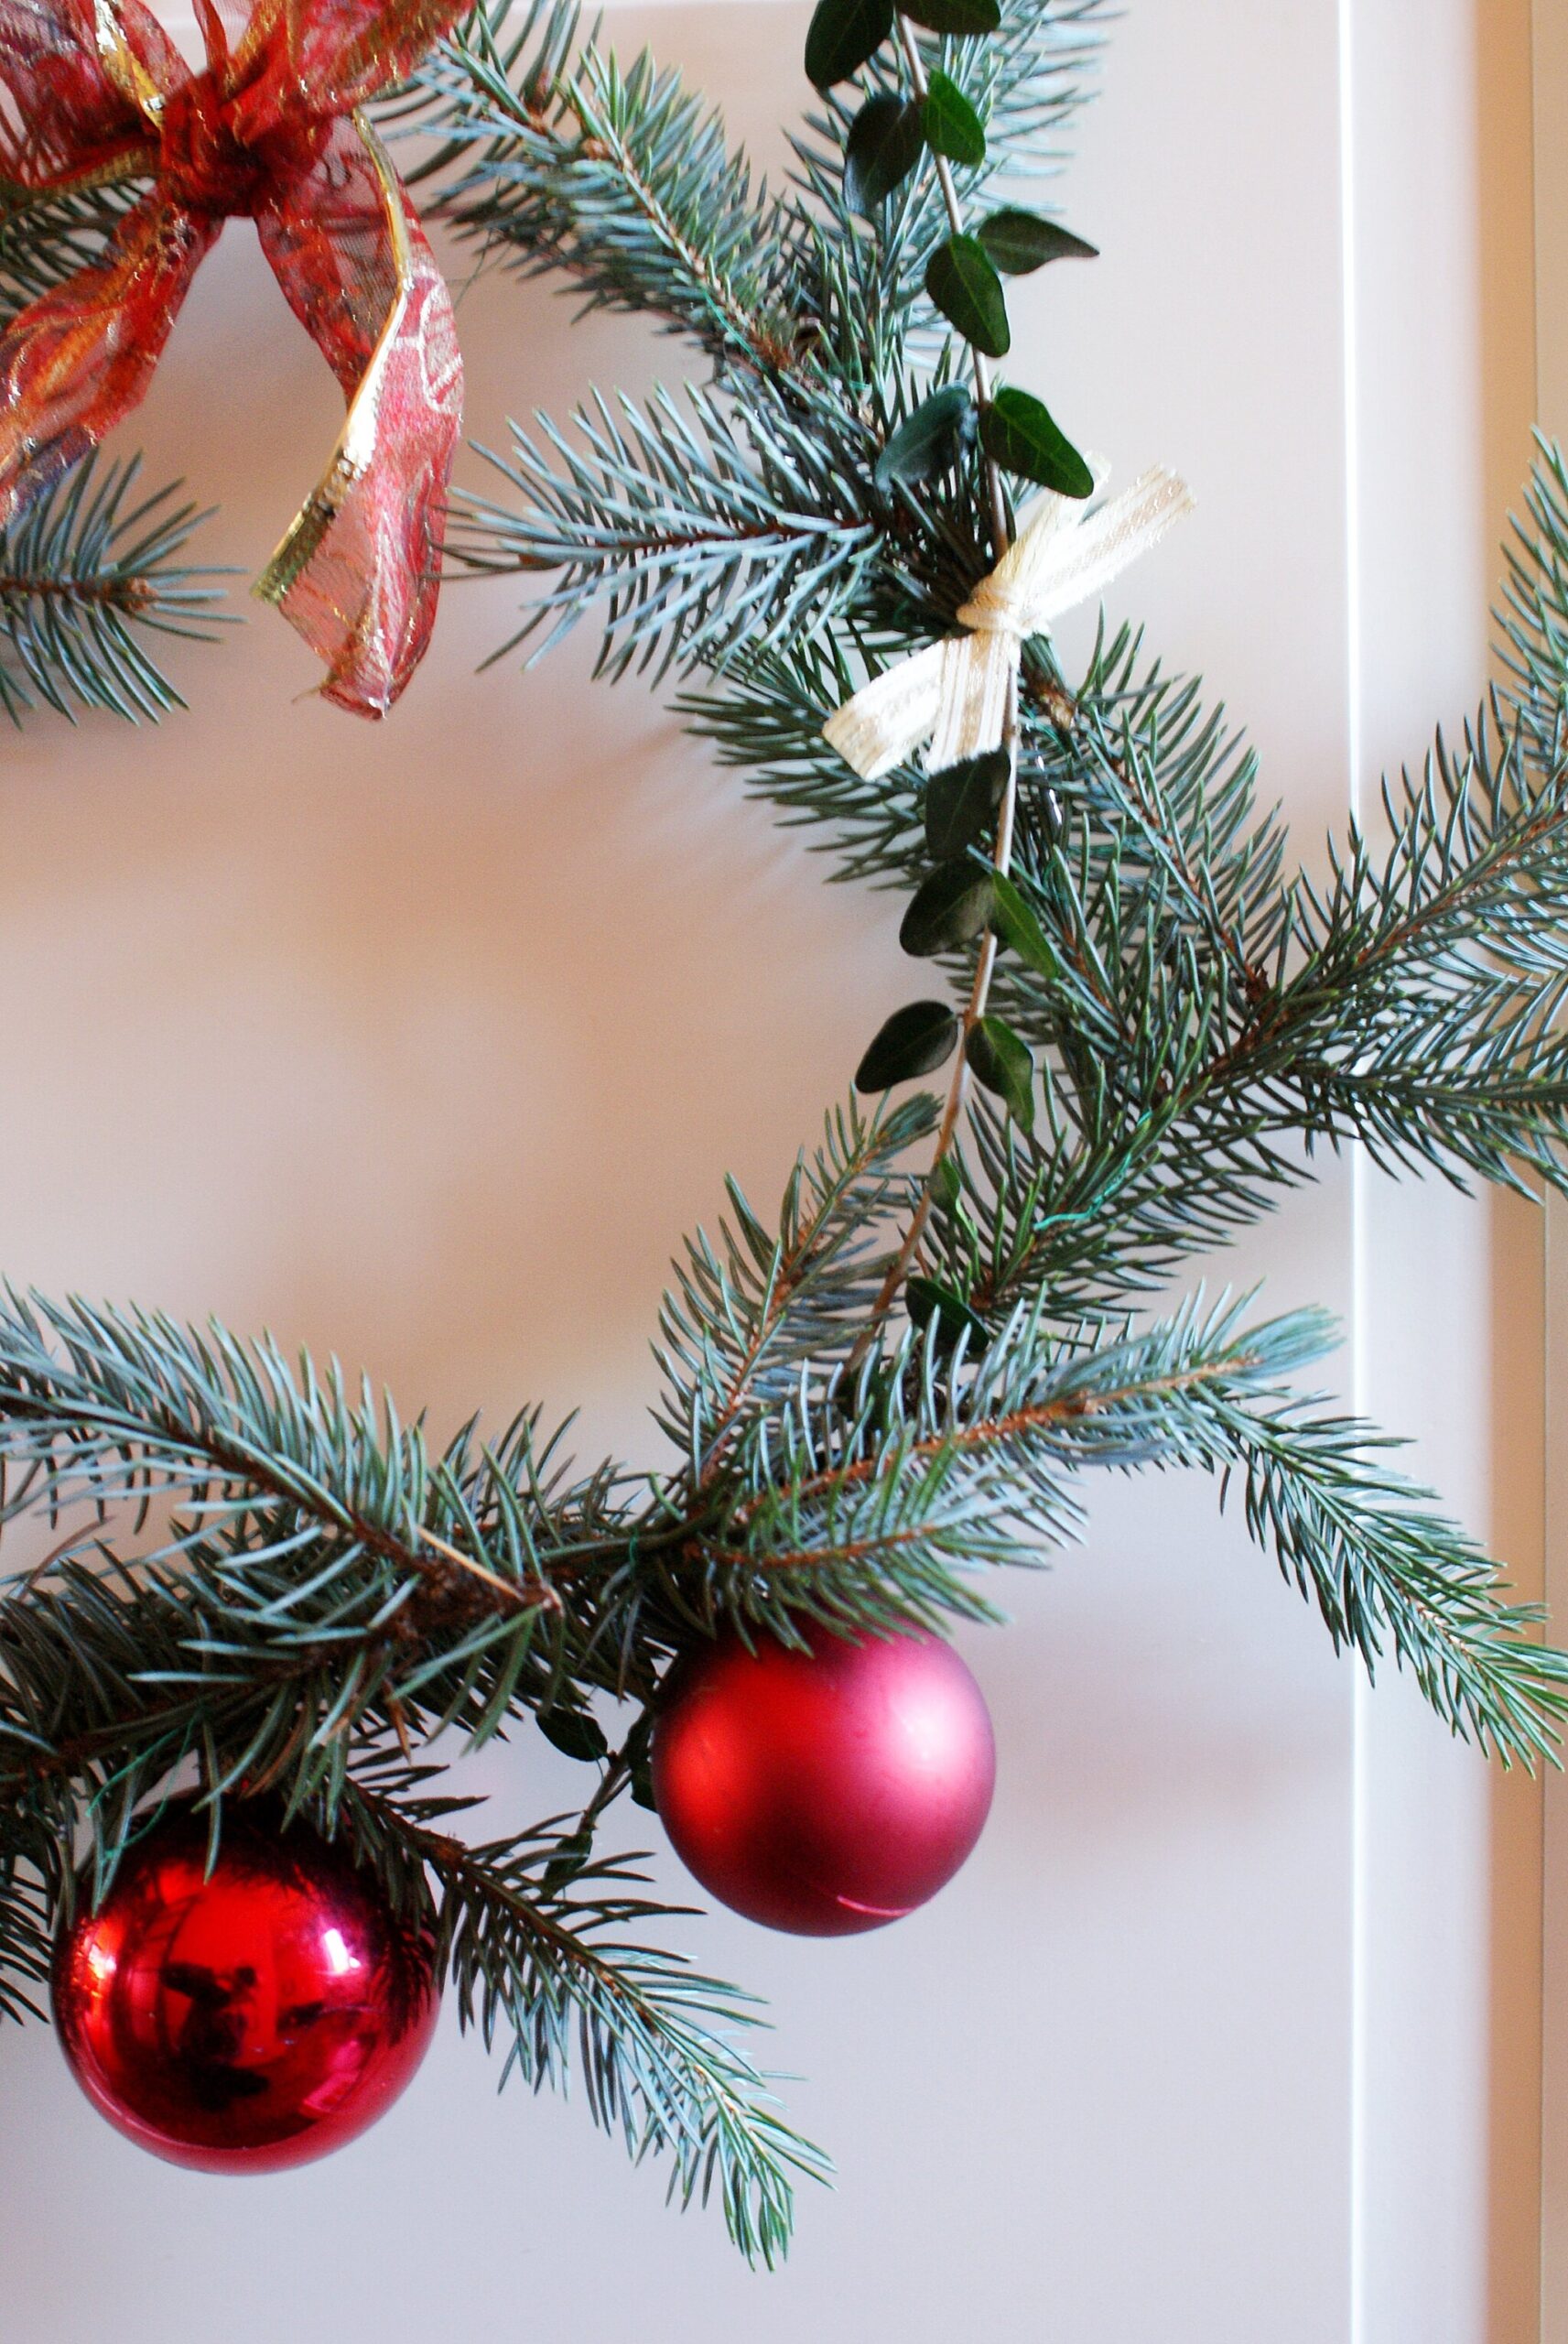 diy-christmas-wreath-idea-decor-garland-pine-easy-corona-ghirlanda-natale-faidate-pino-balls-palline-francinesplaceblog-11-scaled.jpg6